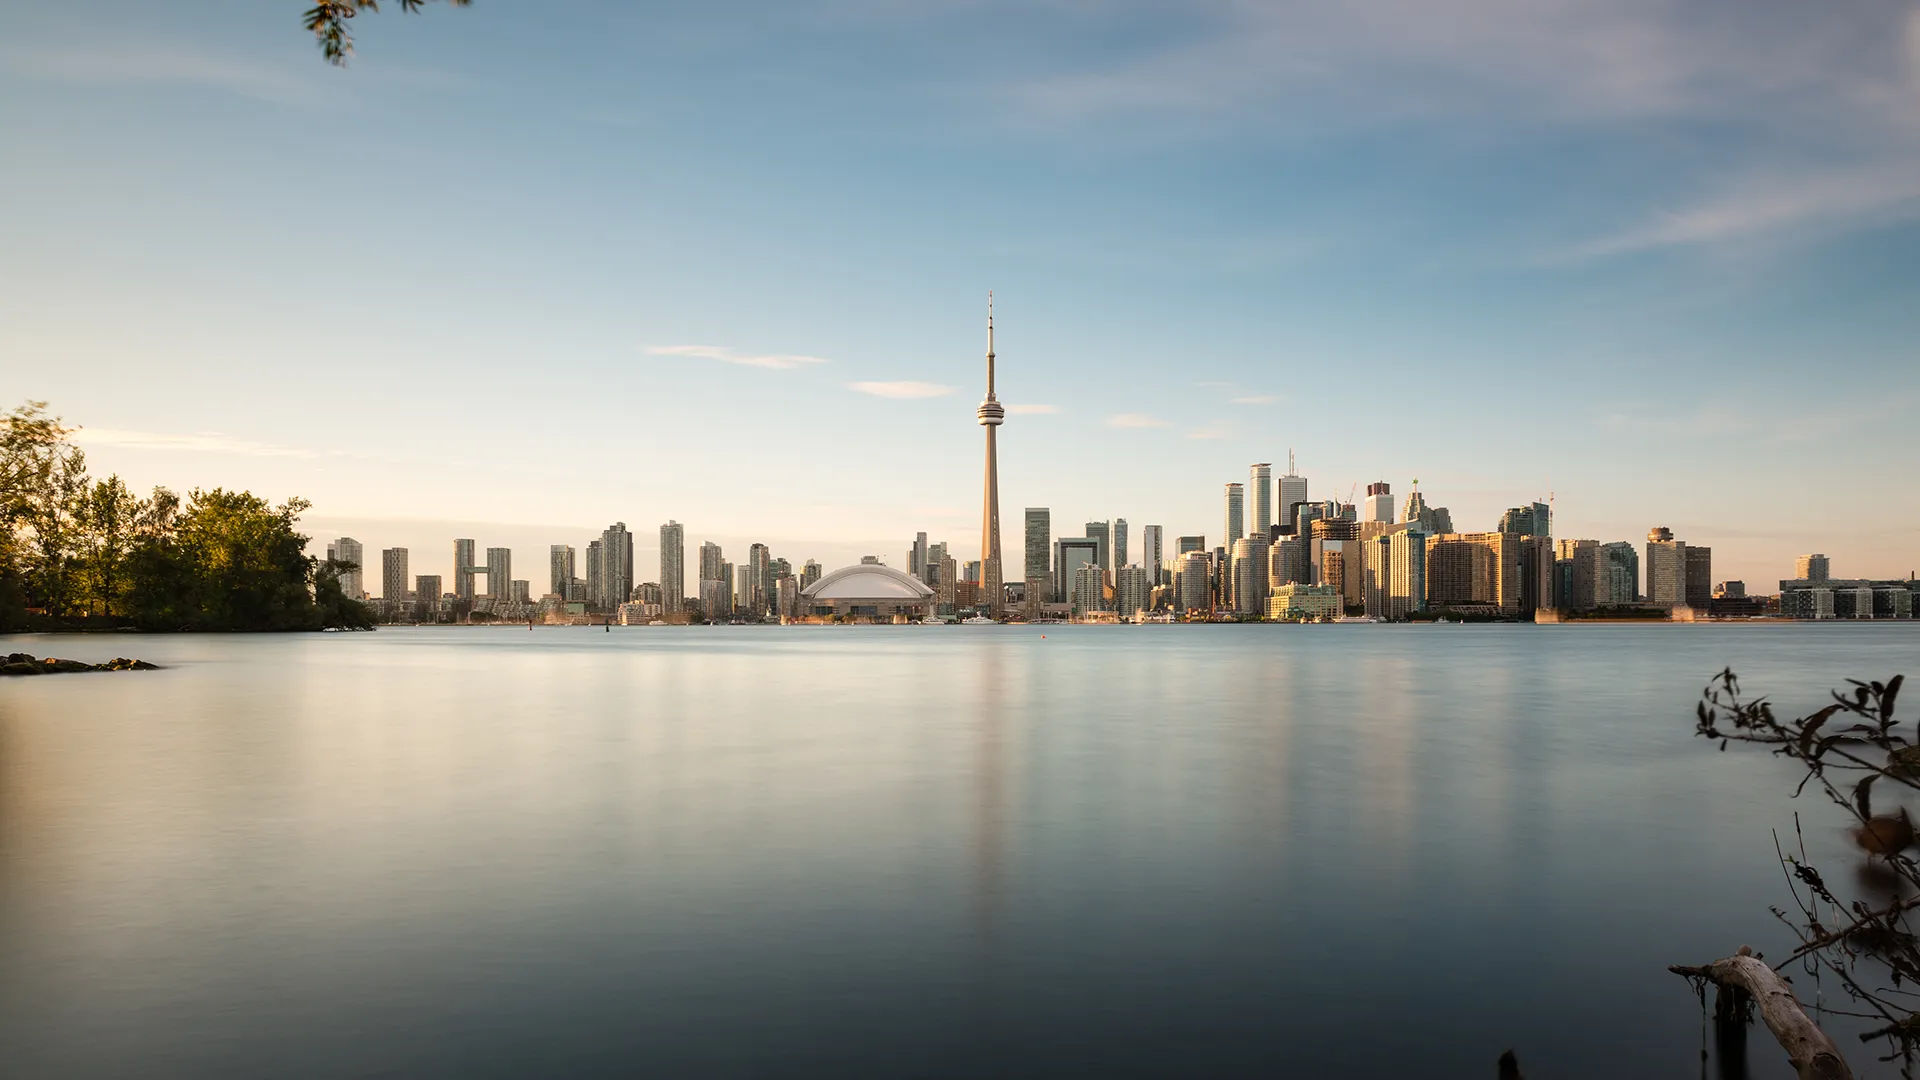 City of Toronto skyline photo taken from Toronto Island. Lake Ontario in the foreground